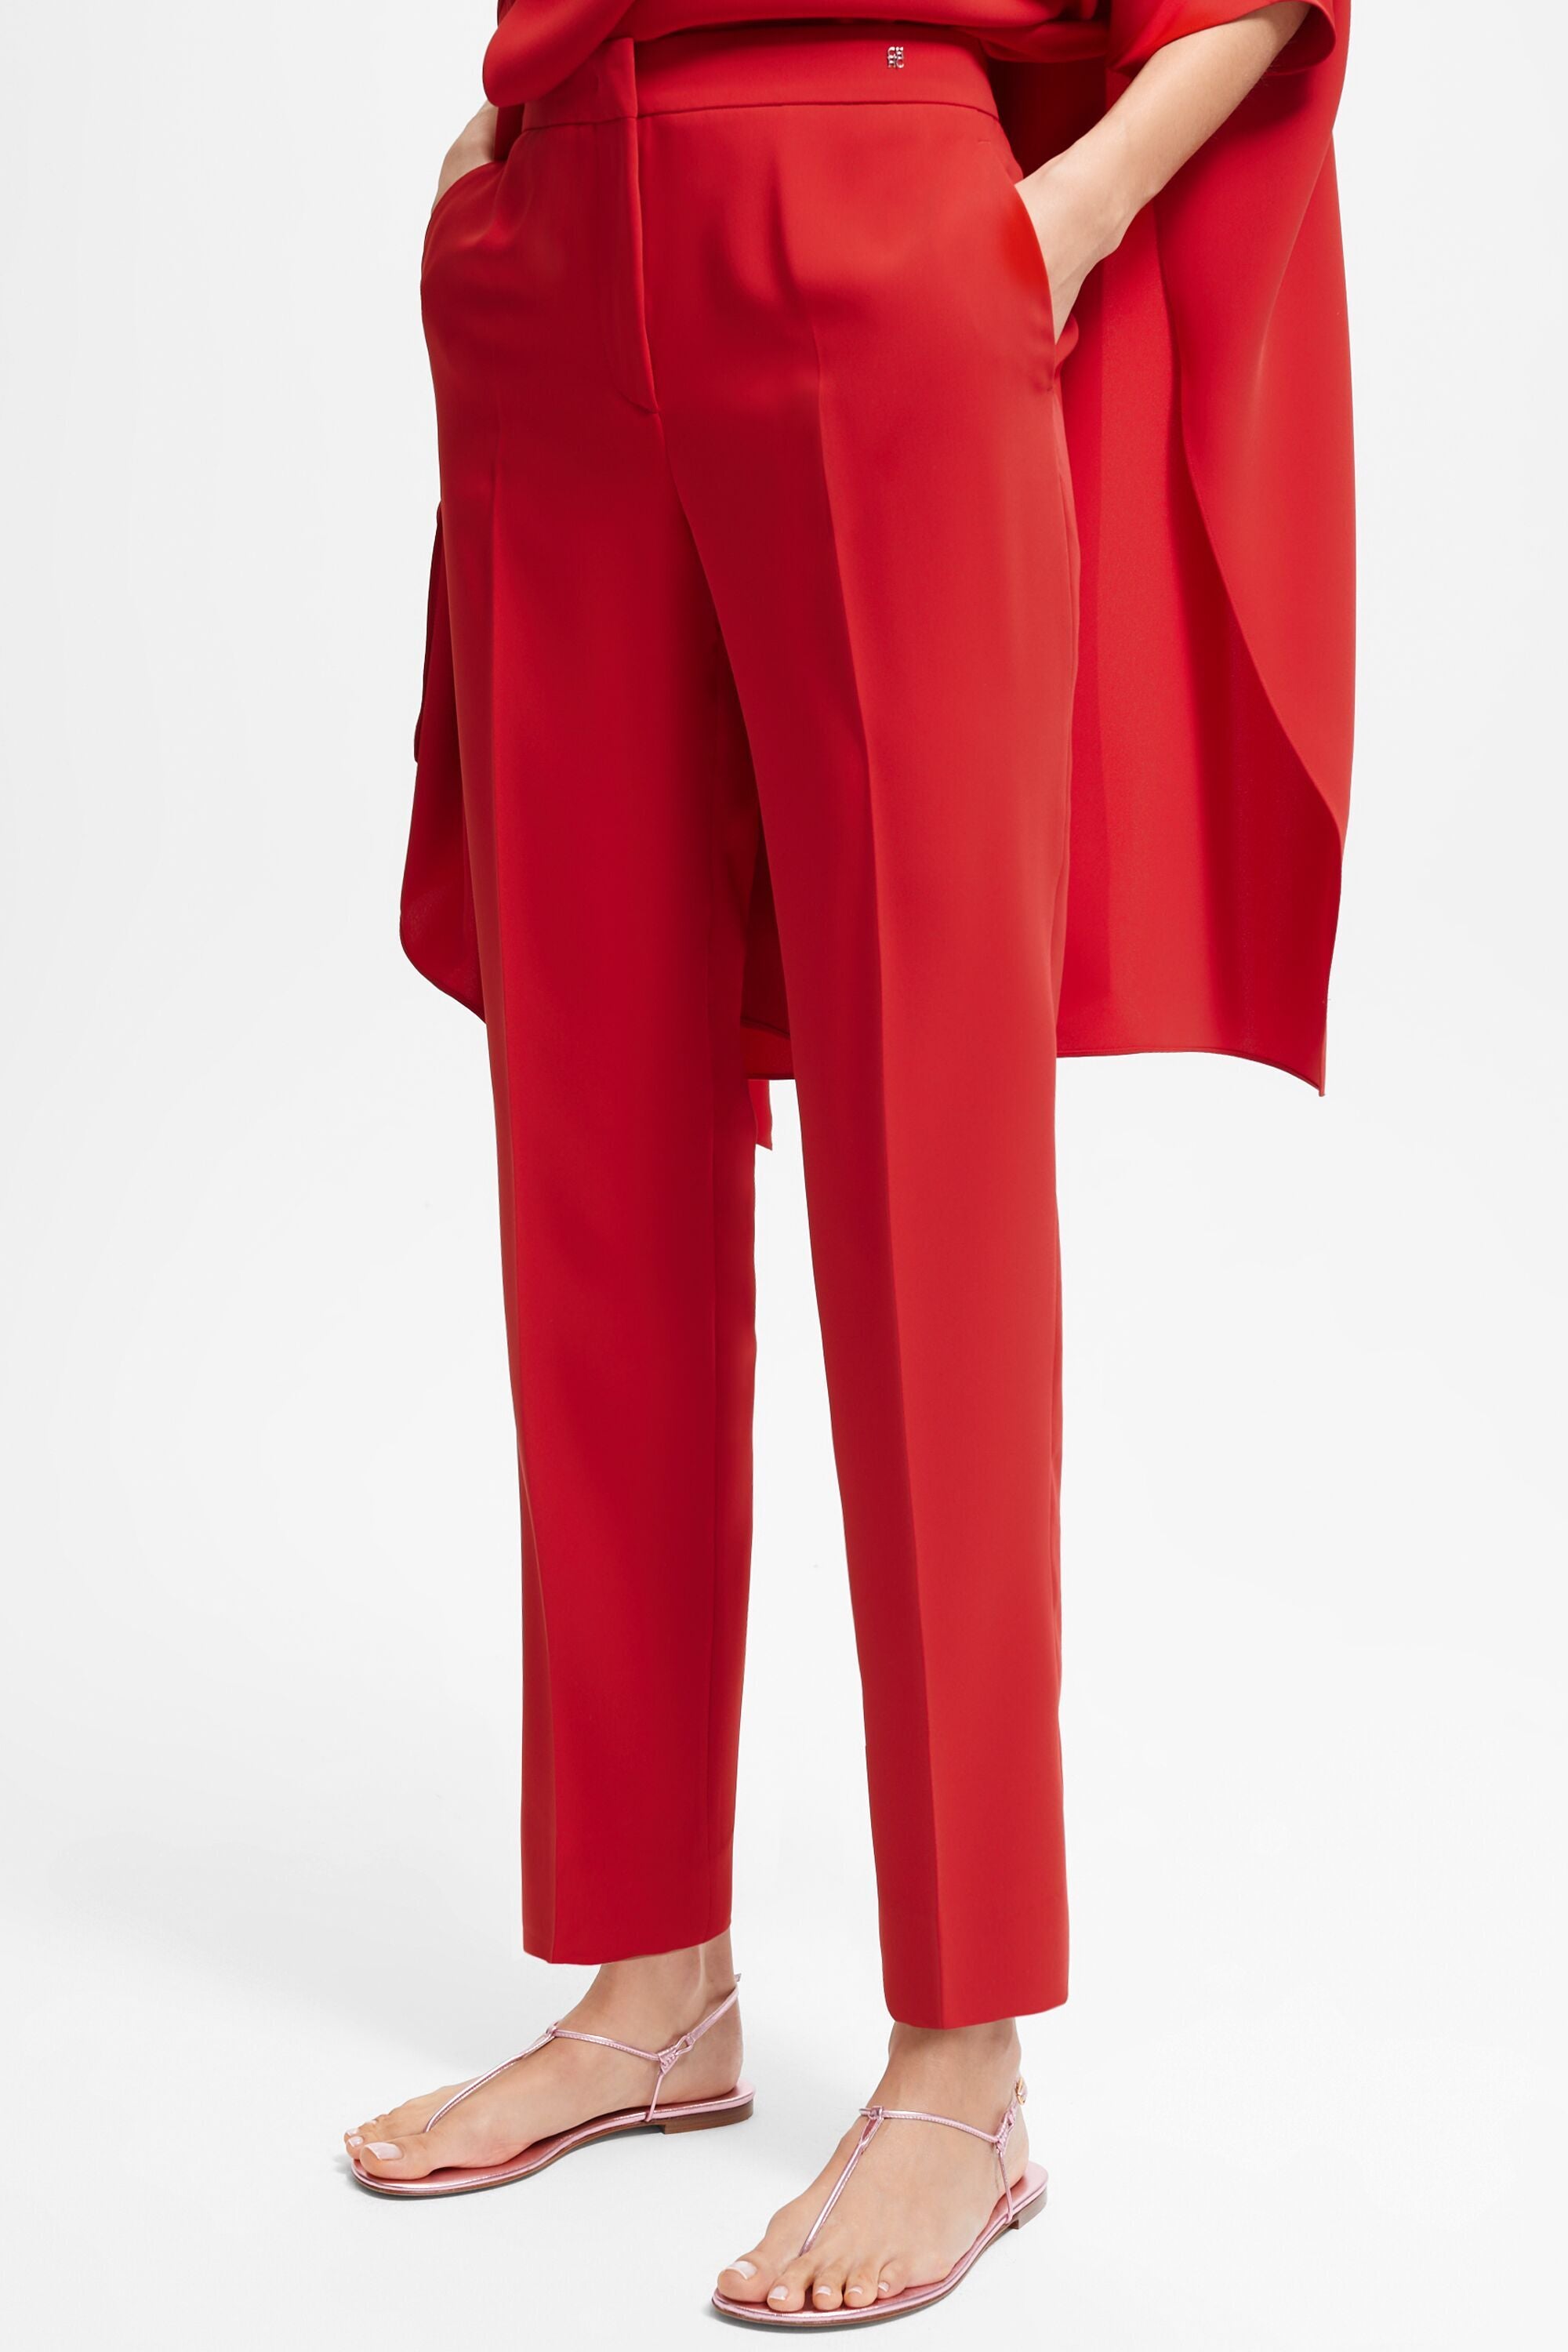 50s Irvine Tartan Cigarette Trousers in Red